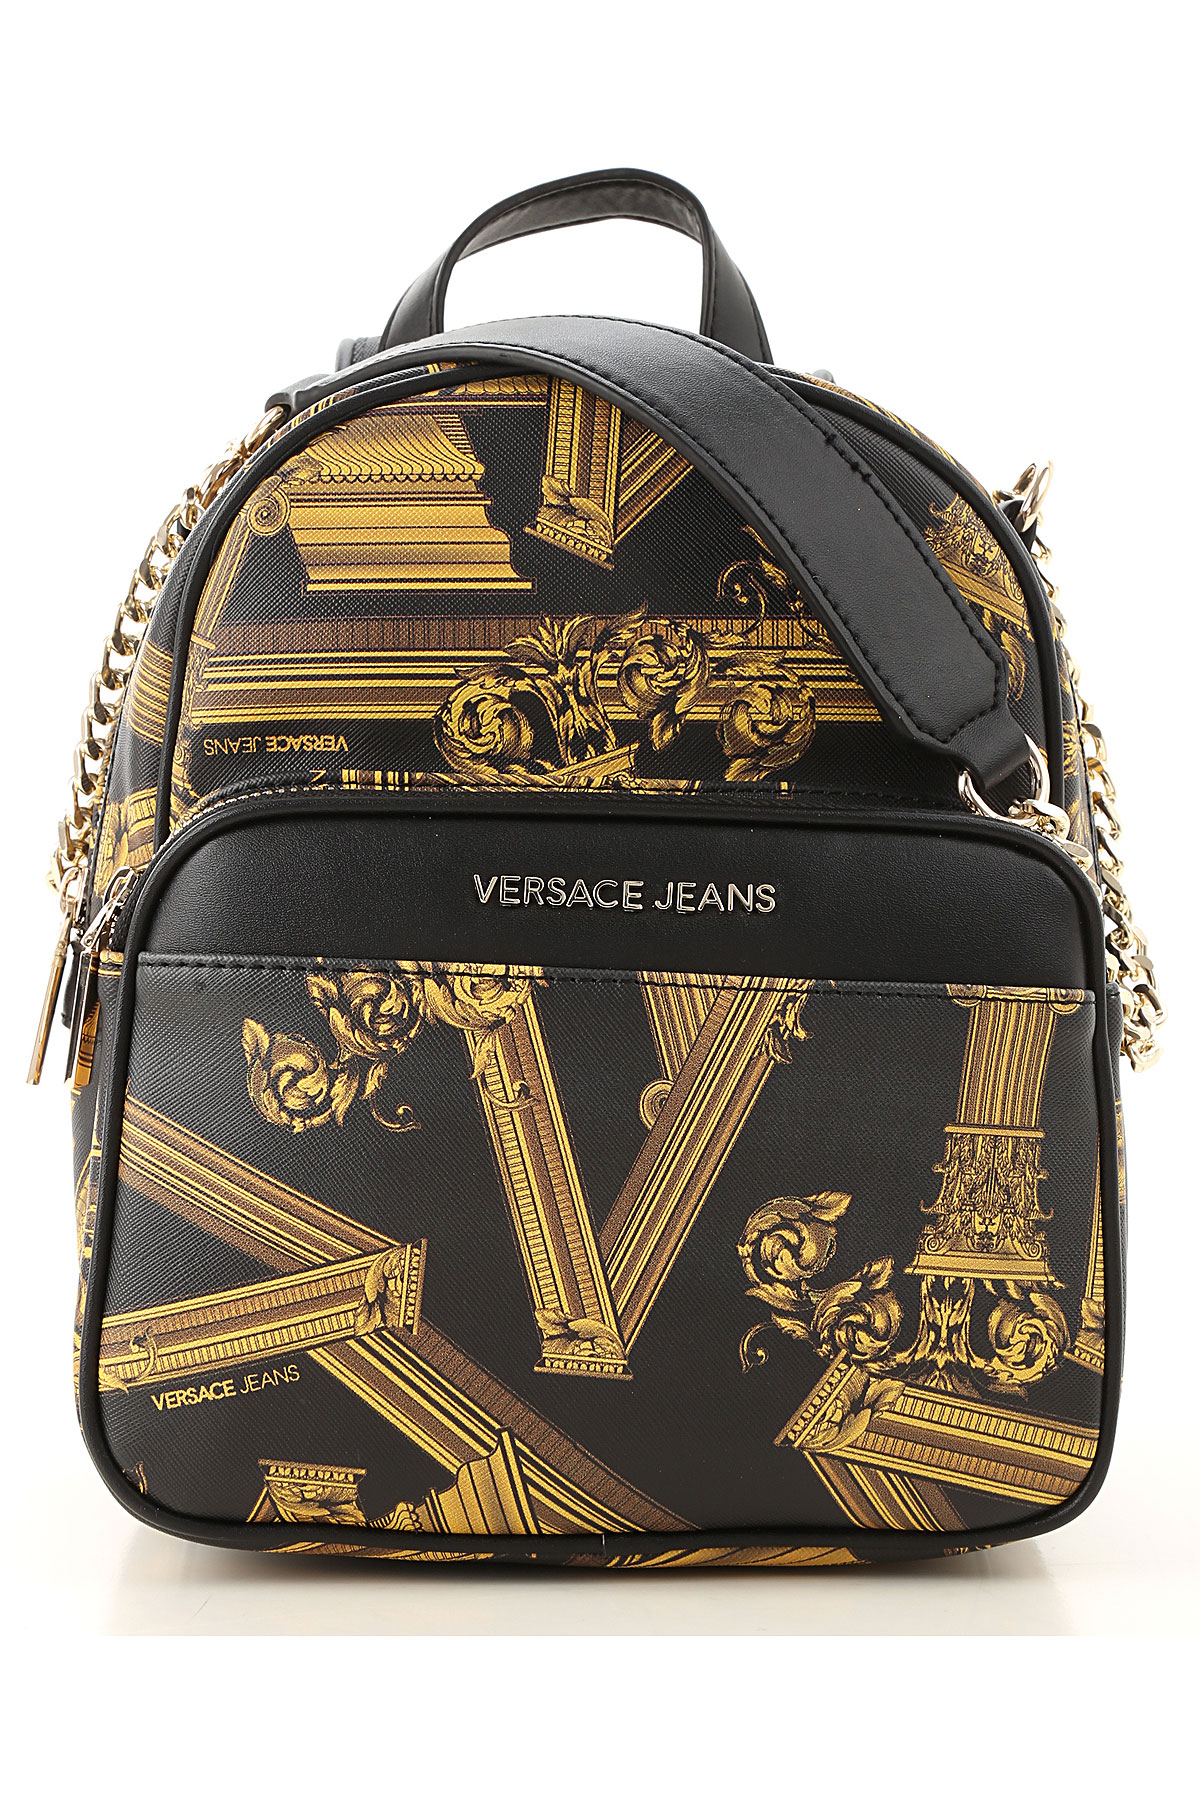 handbags versace